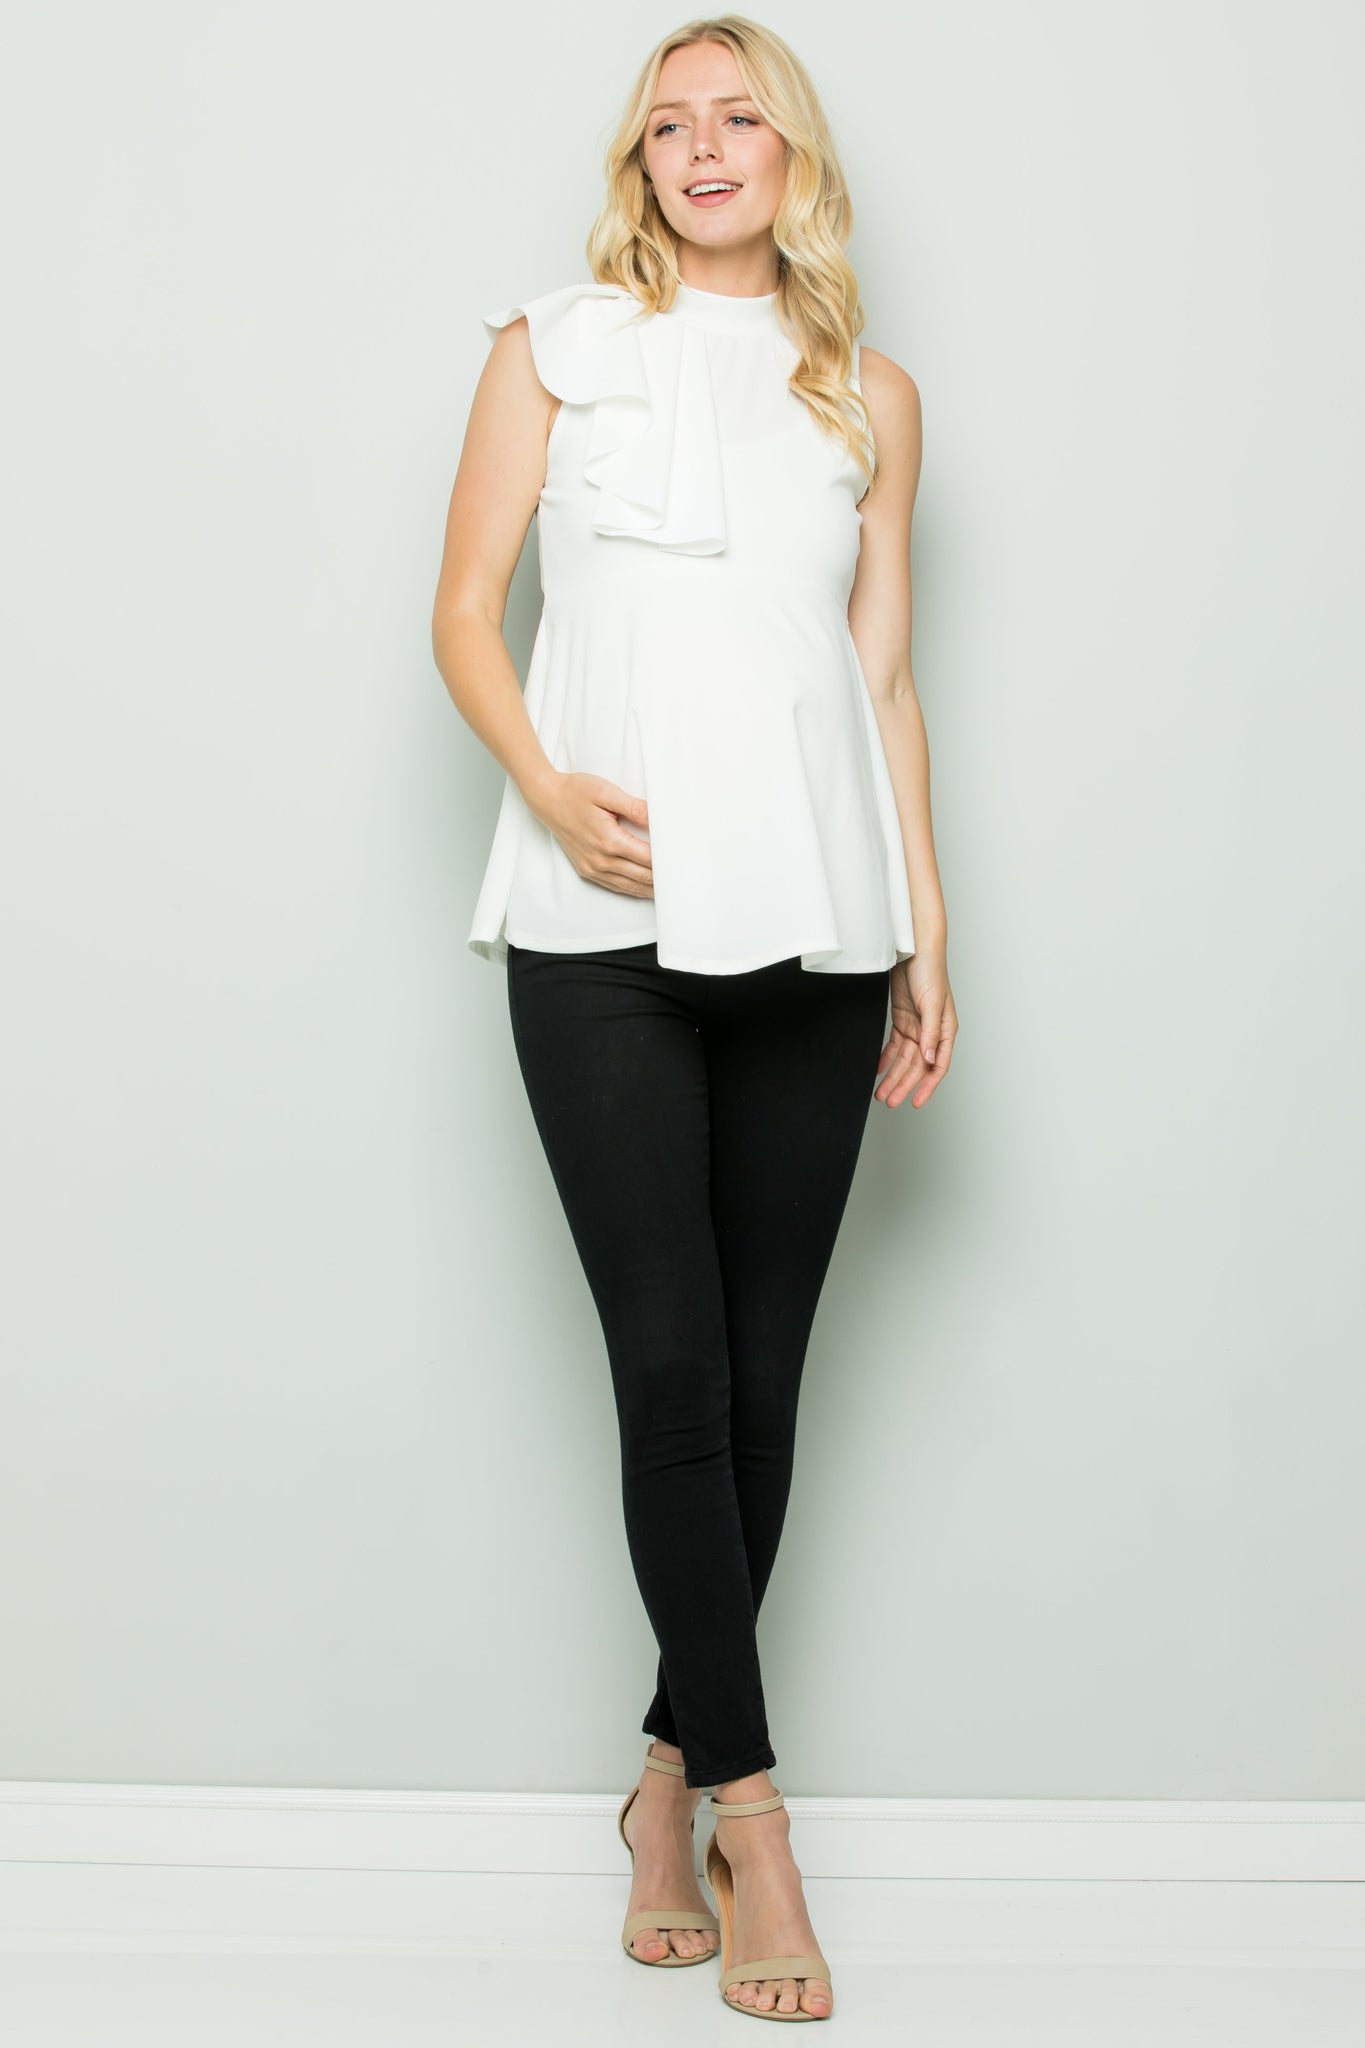 maternity pregnancy baby shower sleeveless peplum top shirt blouse